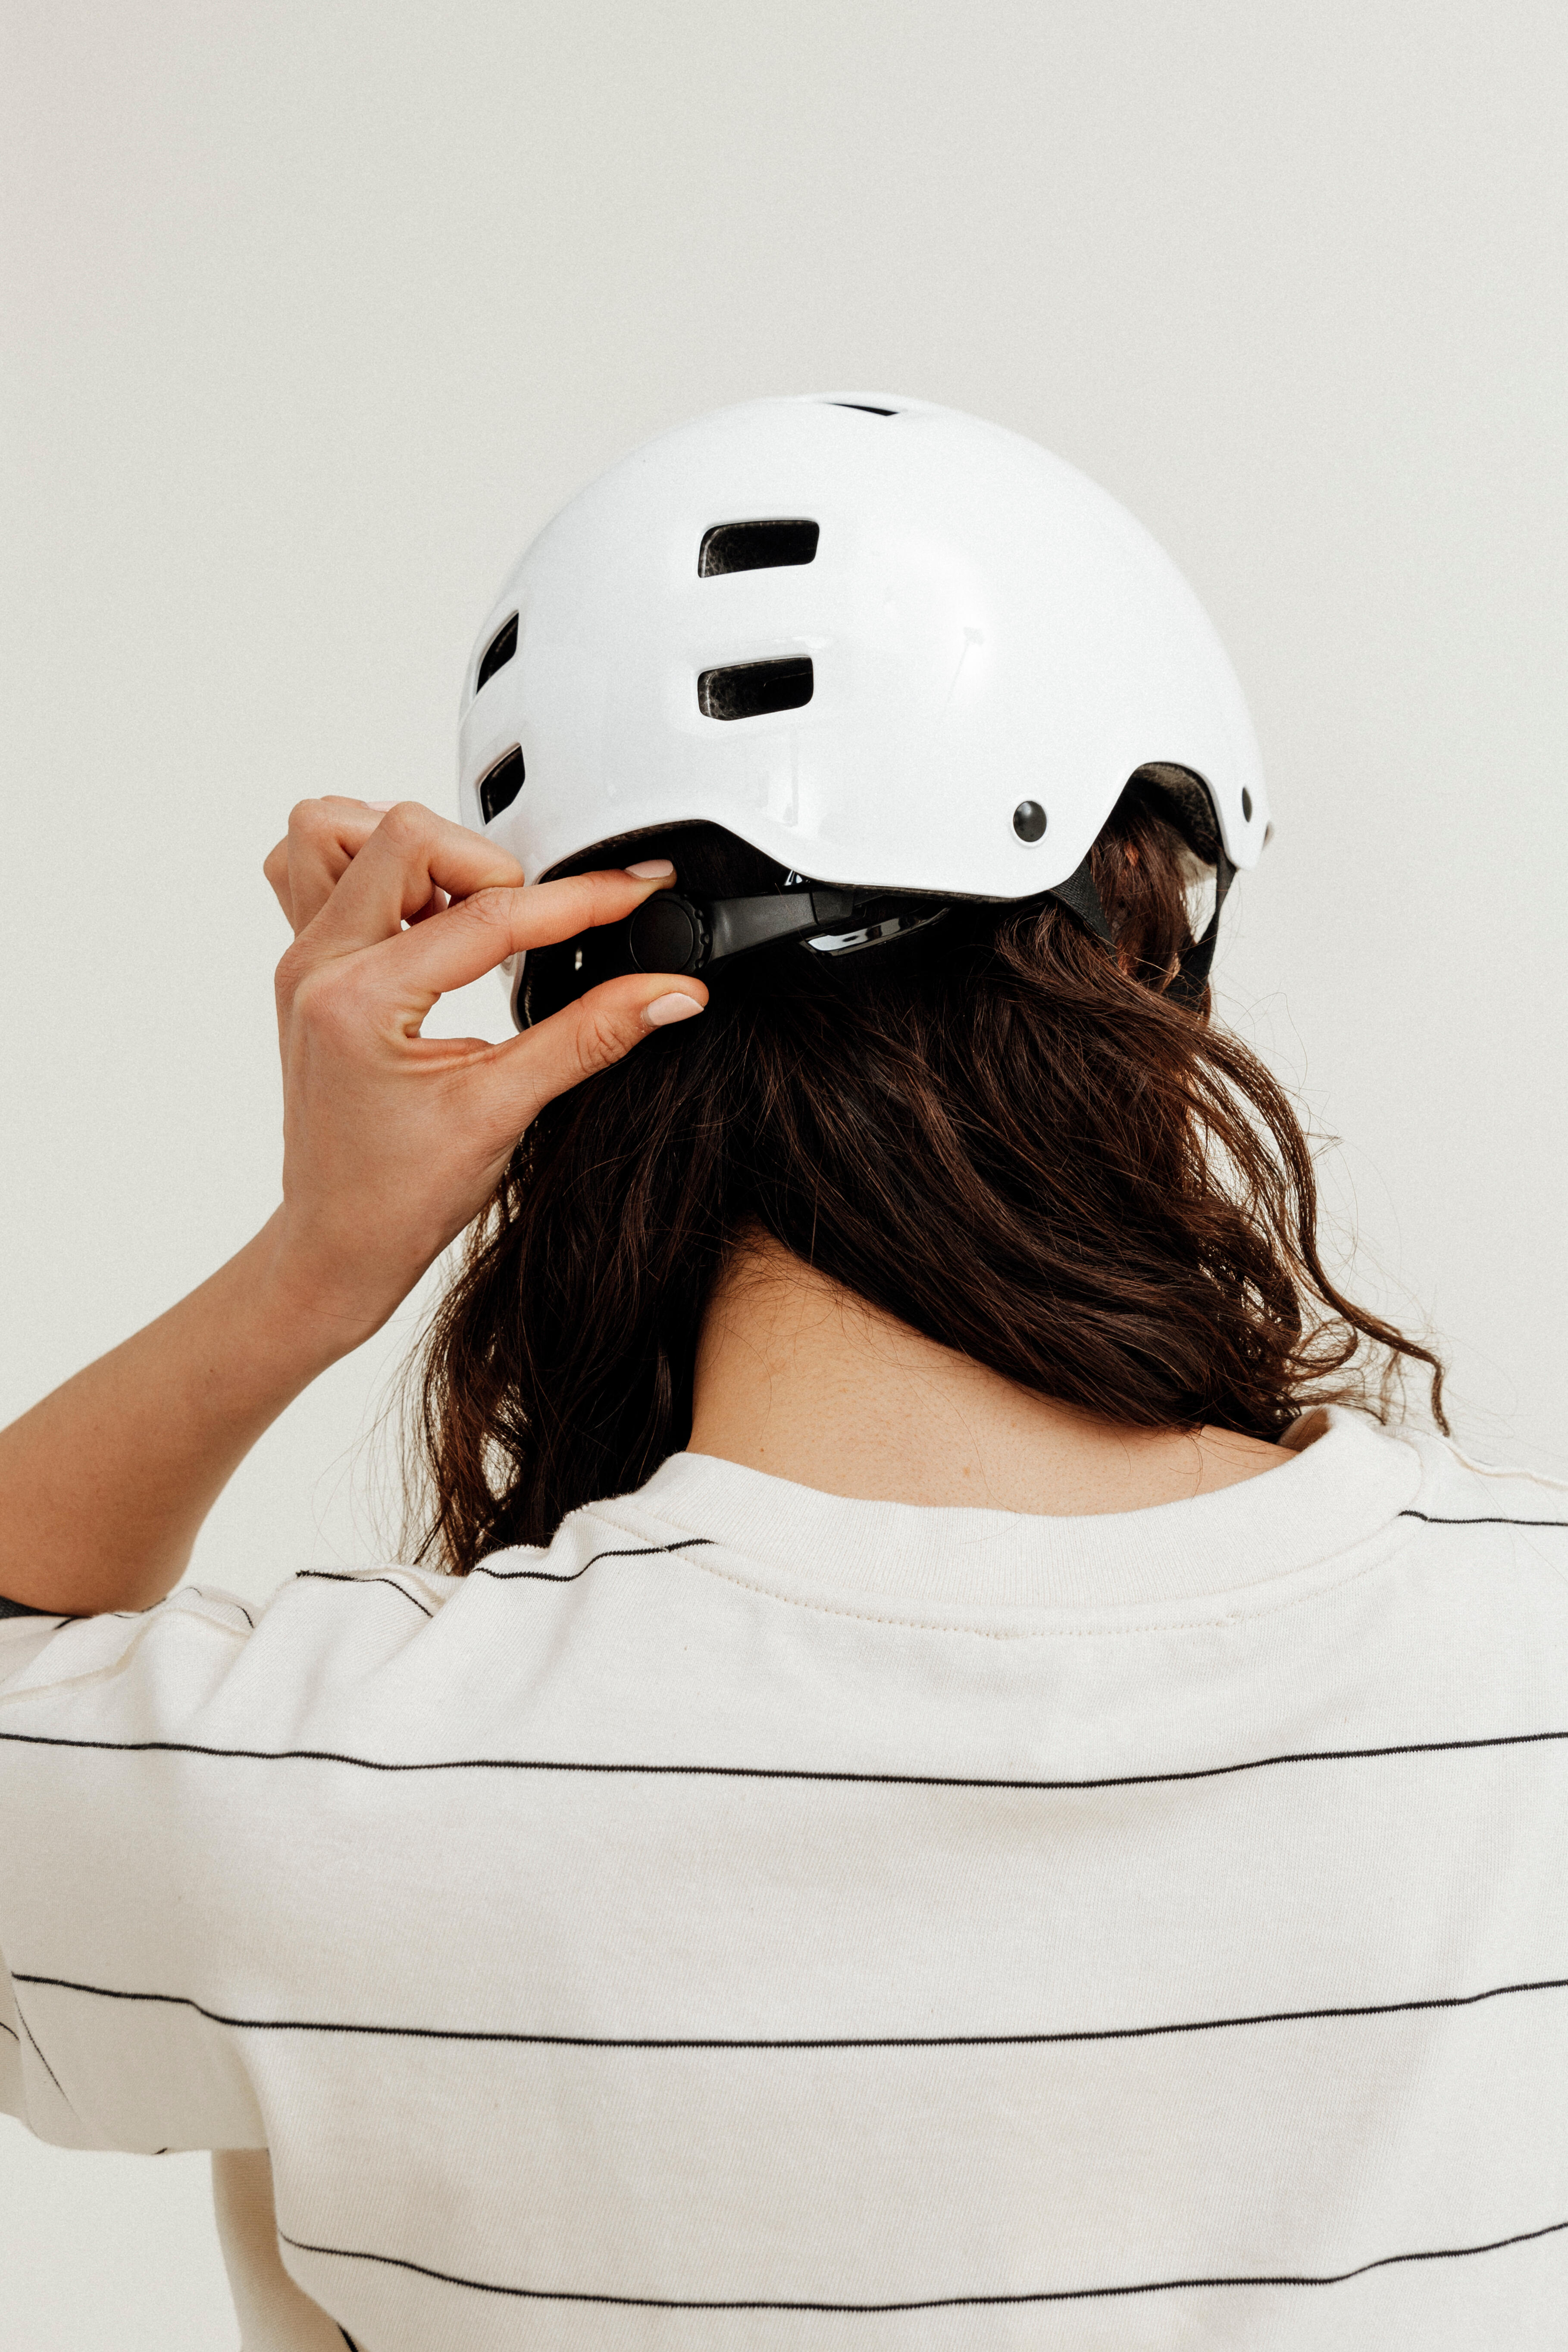 Oxelo Helmet Decathlon Hot Sale Off 62